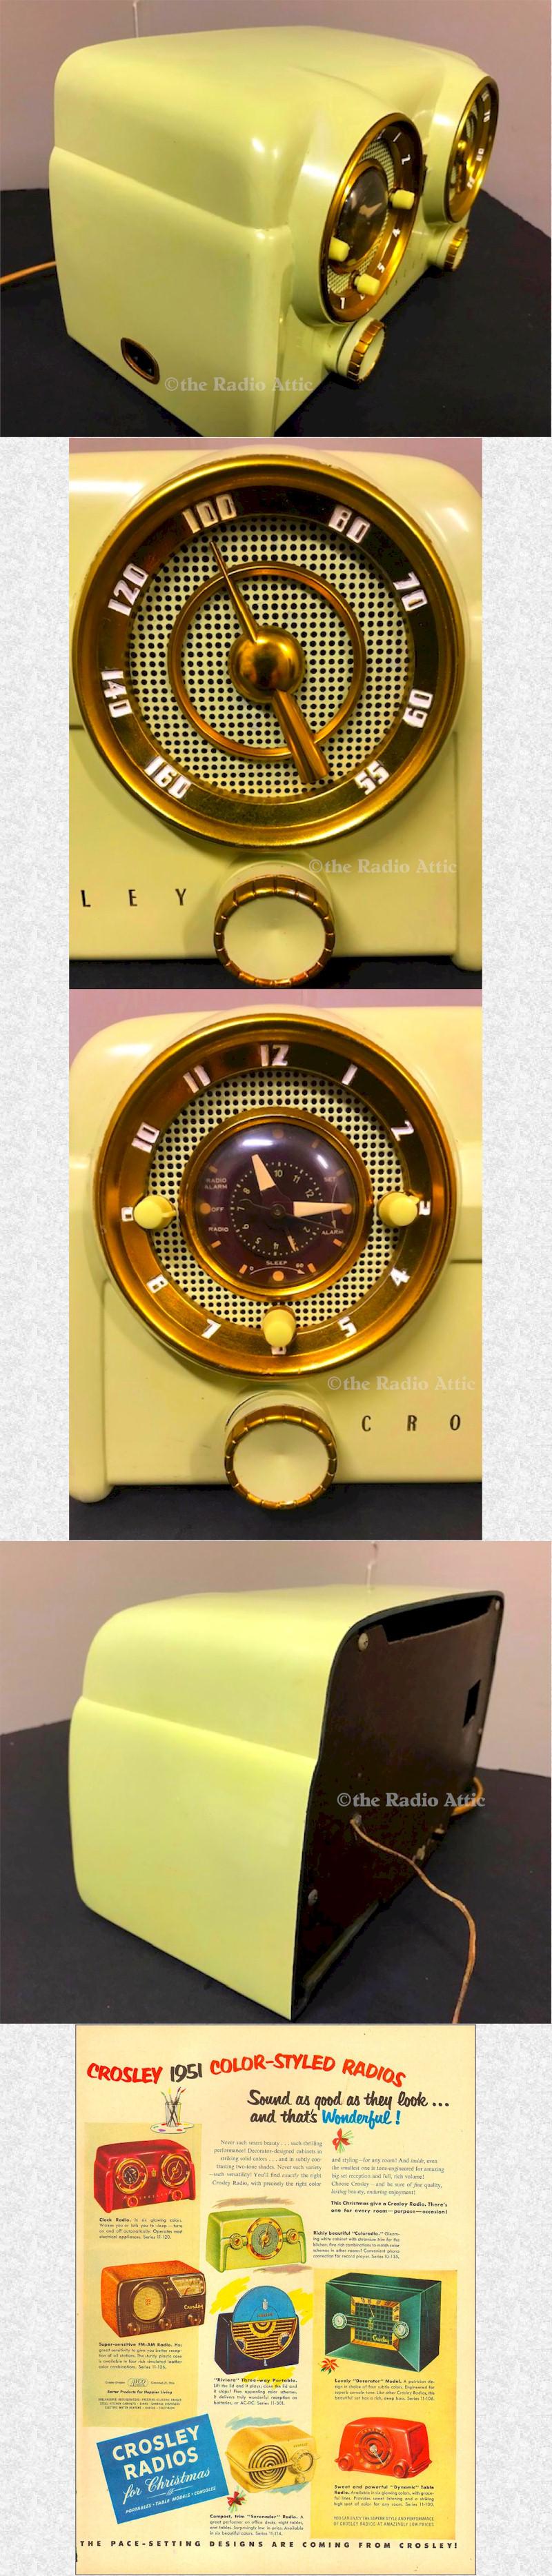 Crosley D-25-CE "Dashboard" Clock Radio (1953)